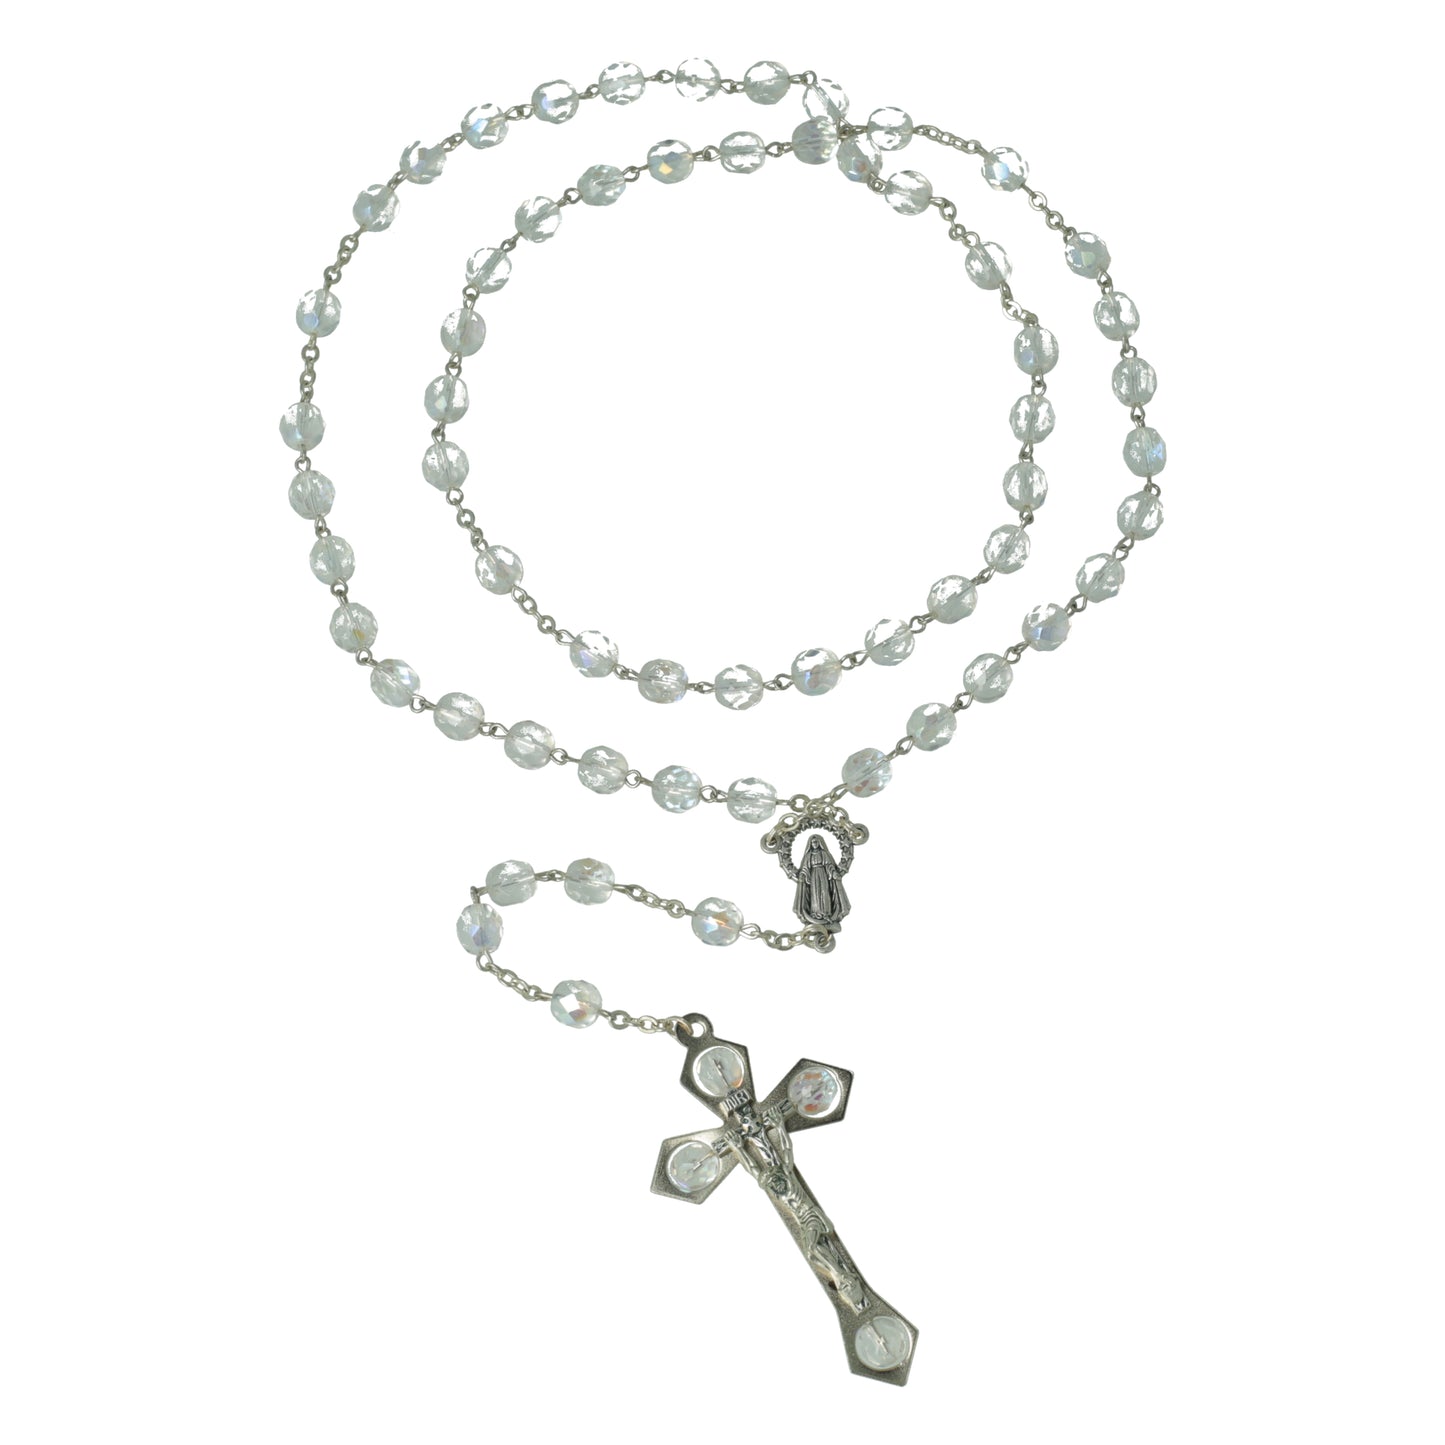 Crystal Rosary Cross Settings in Italian Alpaca Crystal Souvenirs from Italy